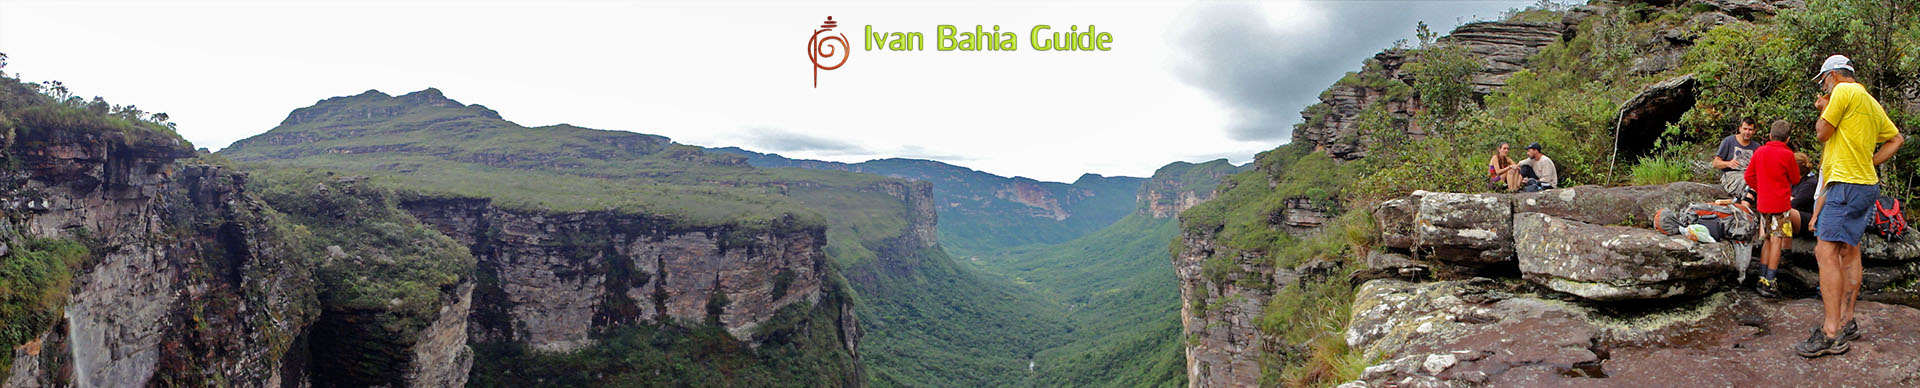 Ivan Bahia tour-guide / hiking in Chapada Diamantina National Park (aka 'the Brazilian Grand Canyon') mountain views